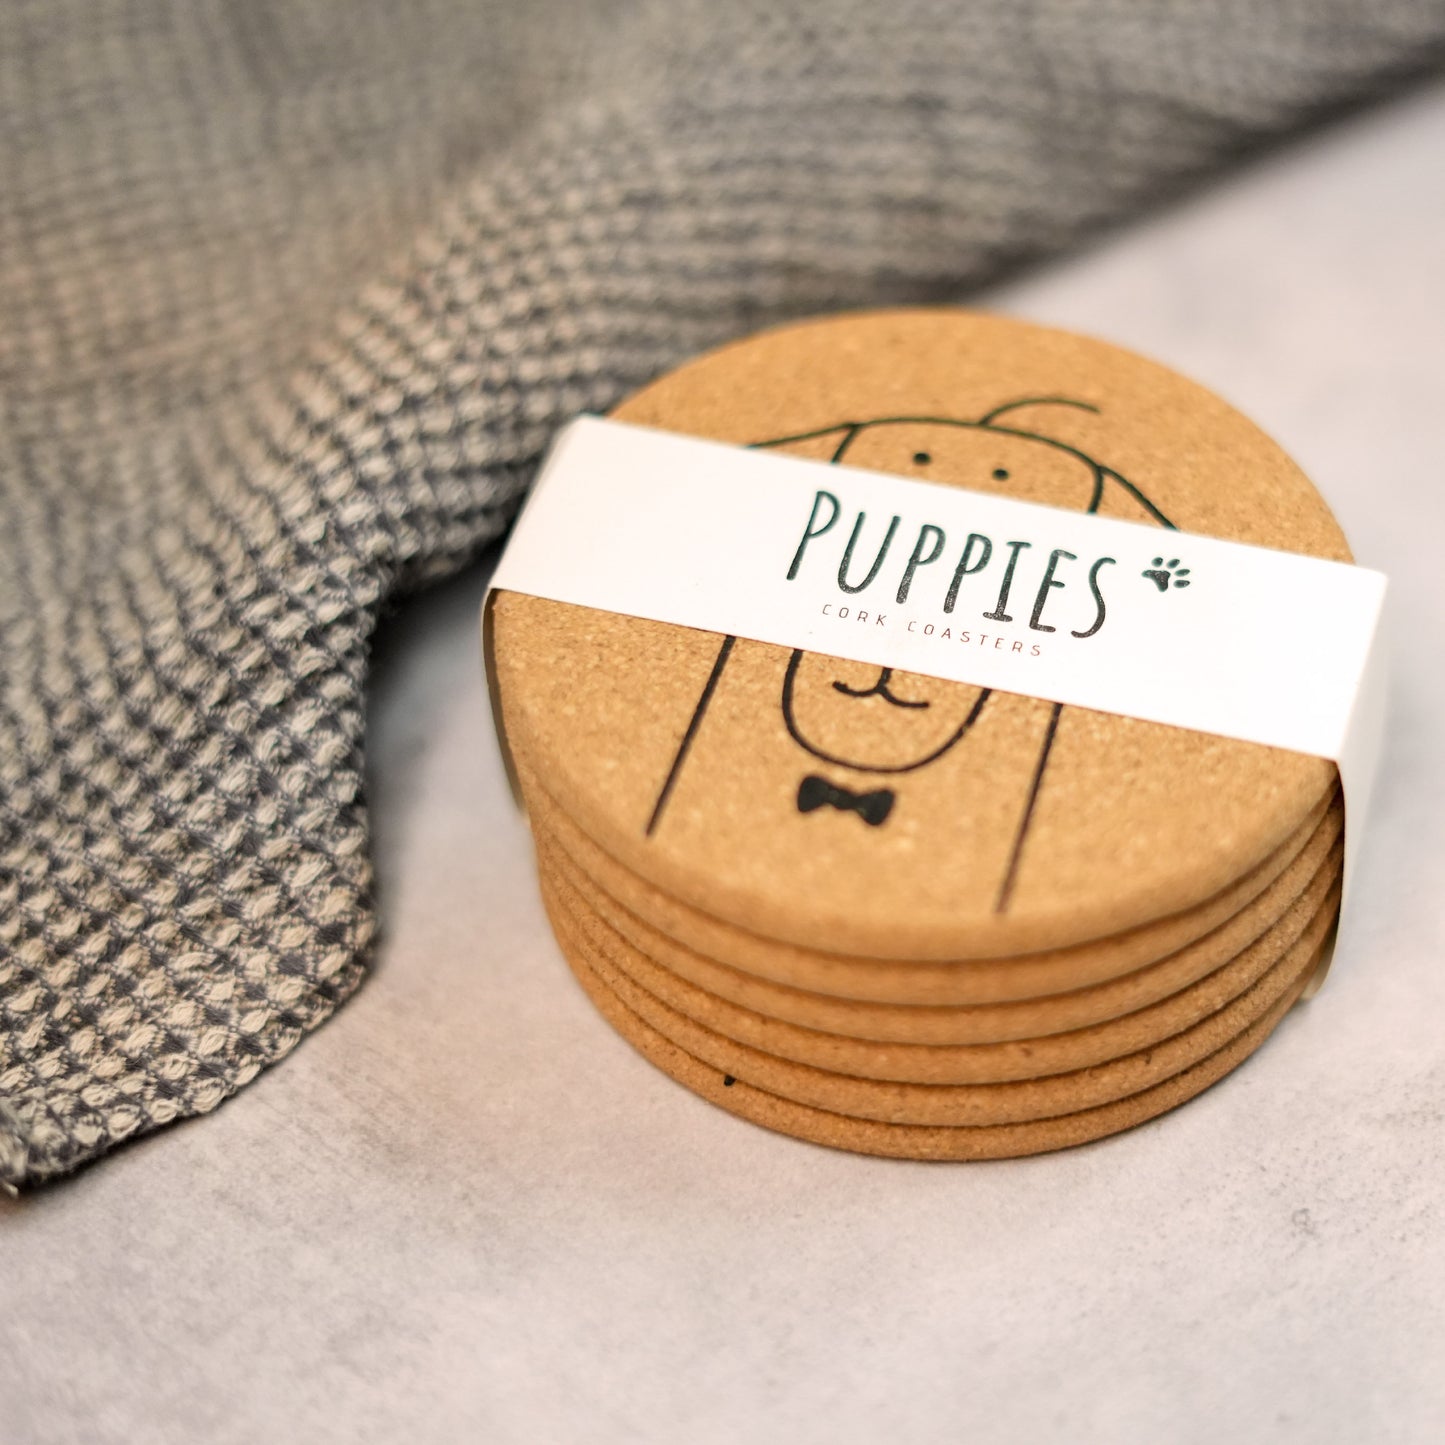 PUPPIES - Lindos almofadas de cortiça para cães, redondas, conjunto de 6.